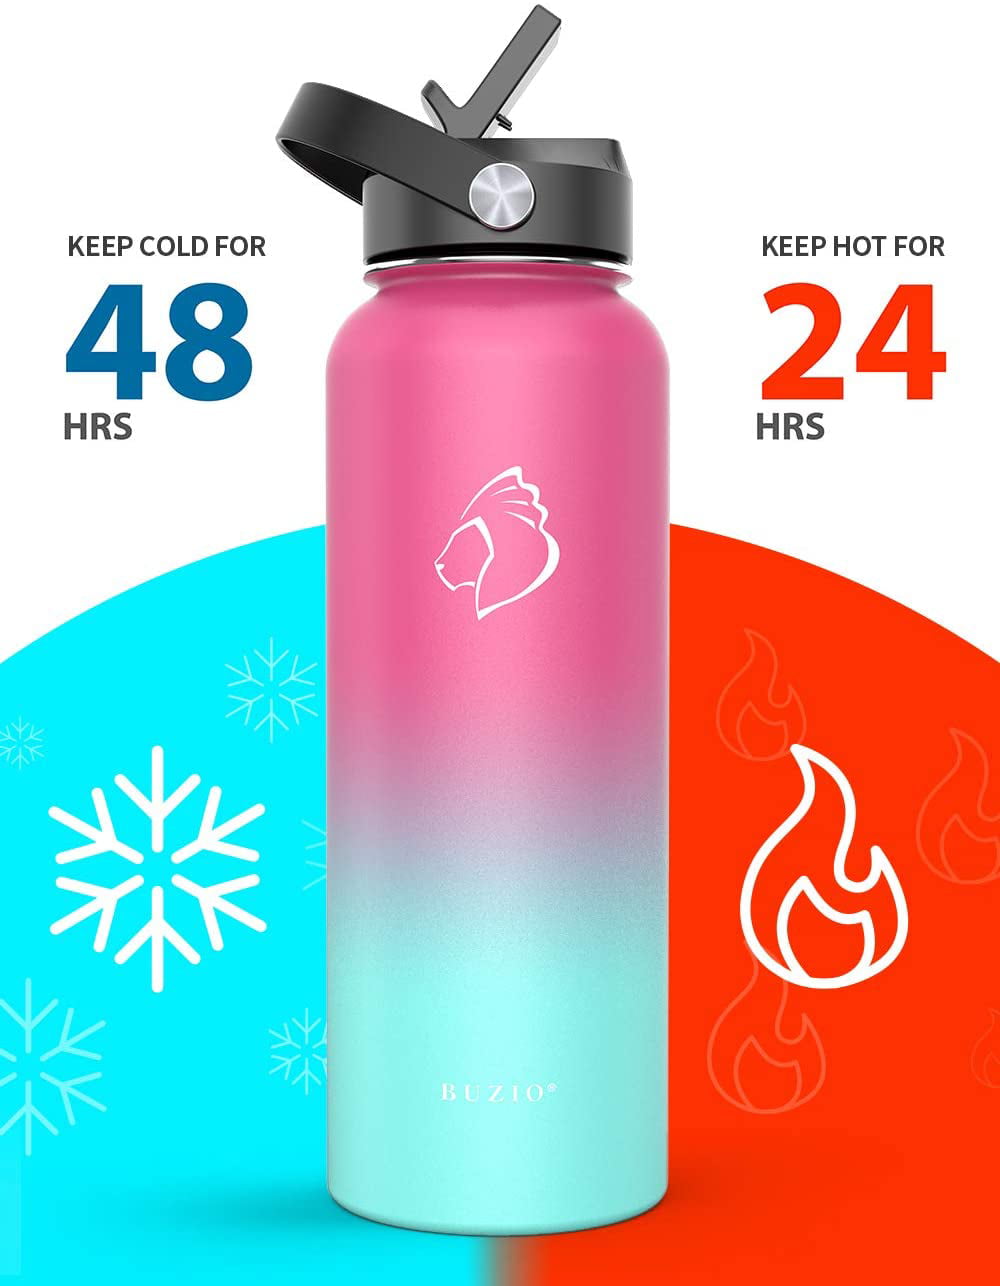 32oz Burn Water Bottle – Obvi